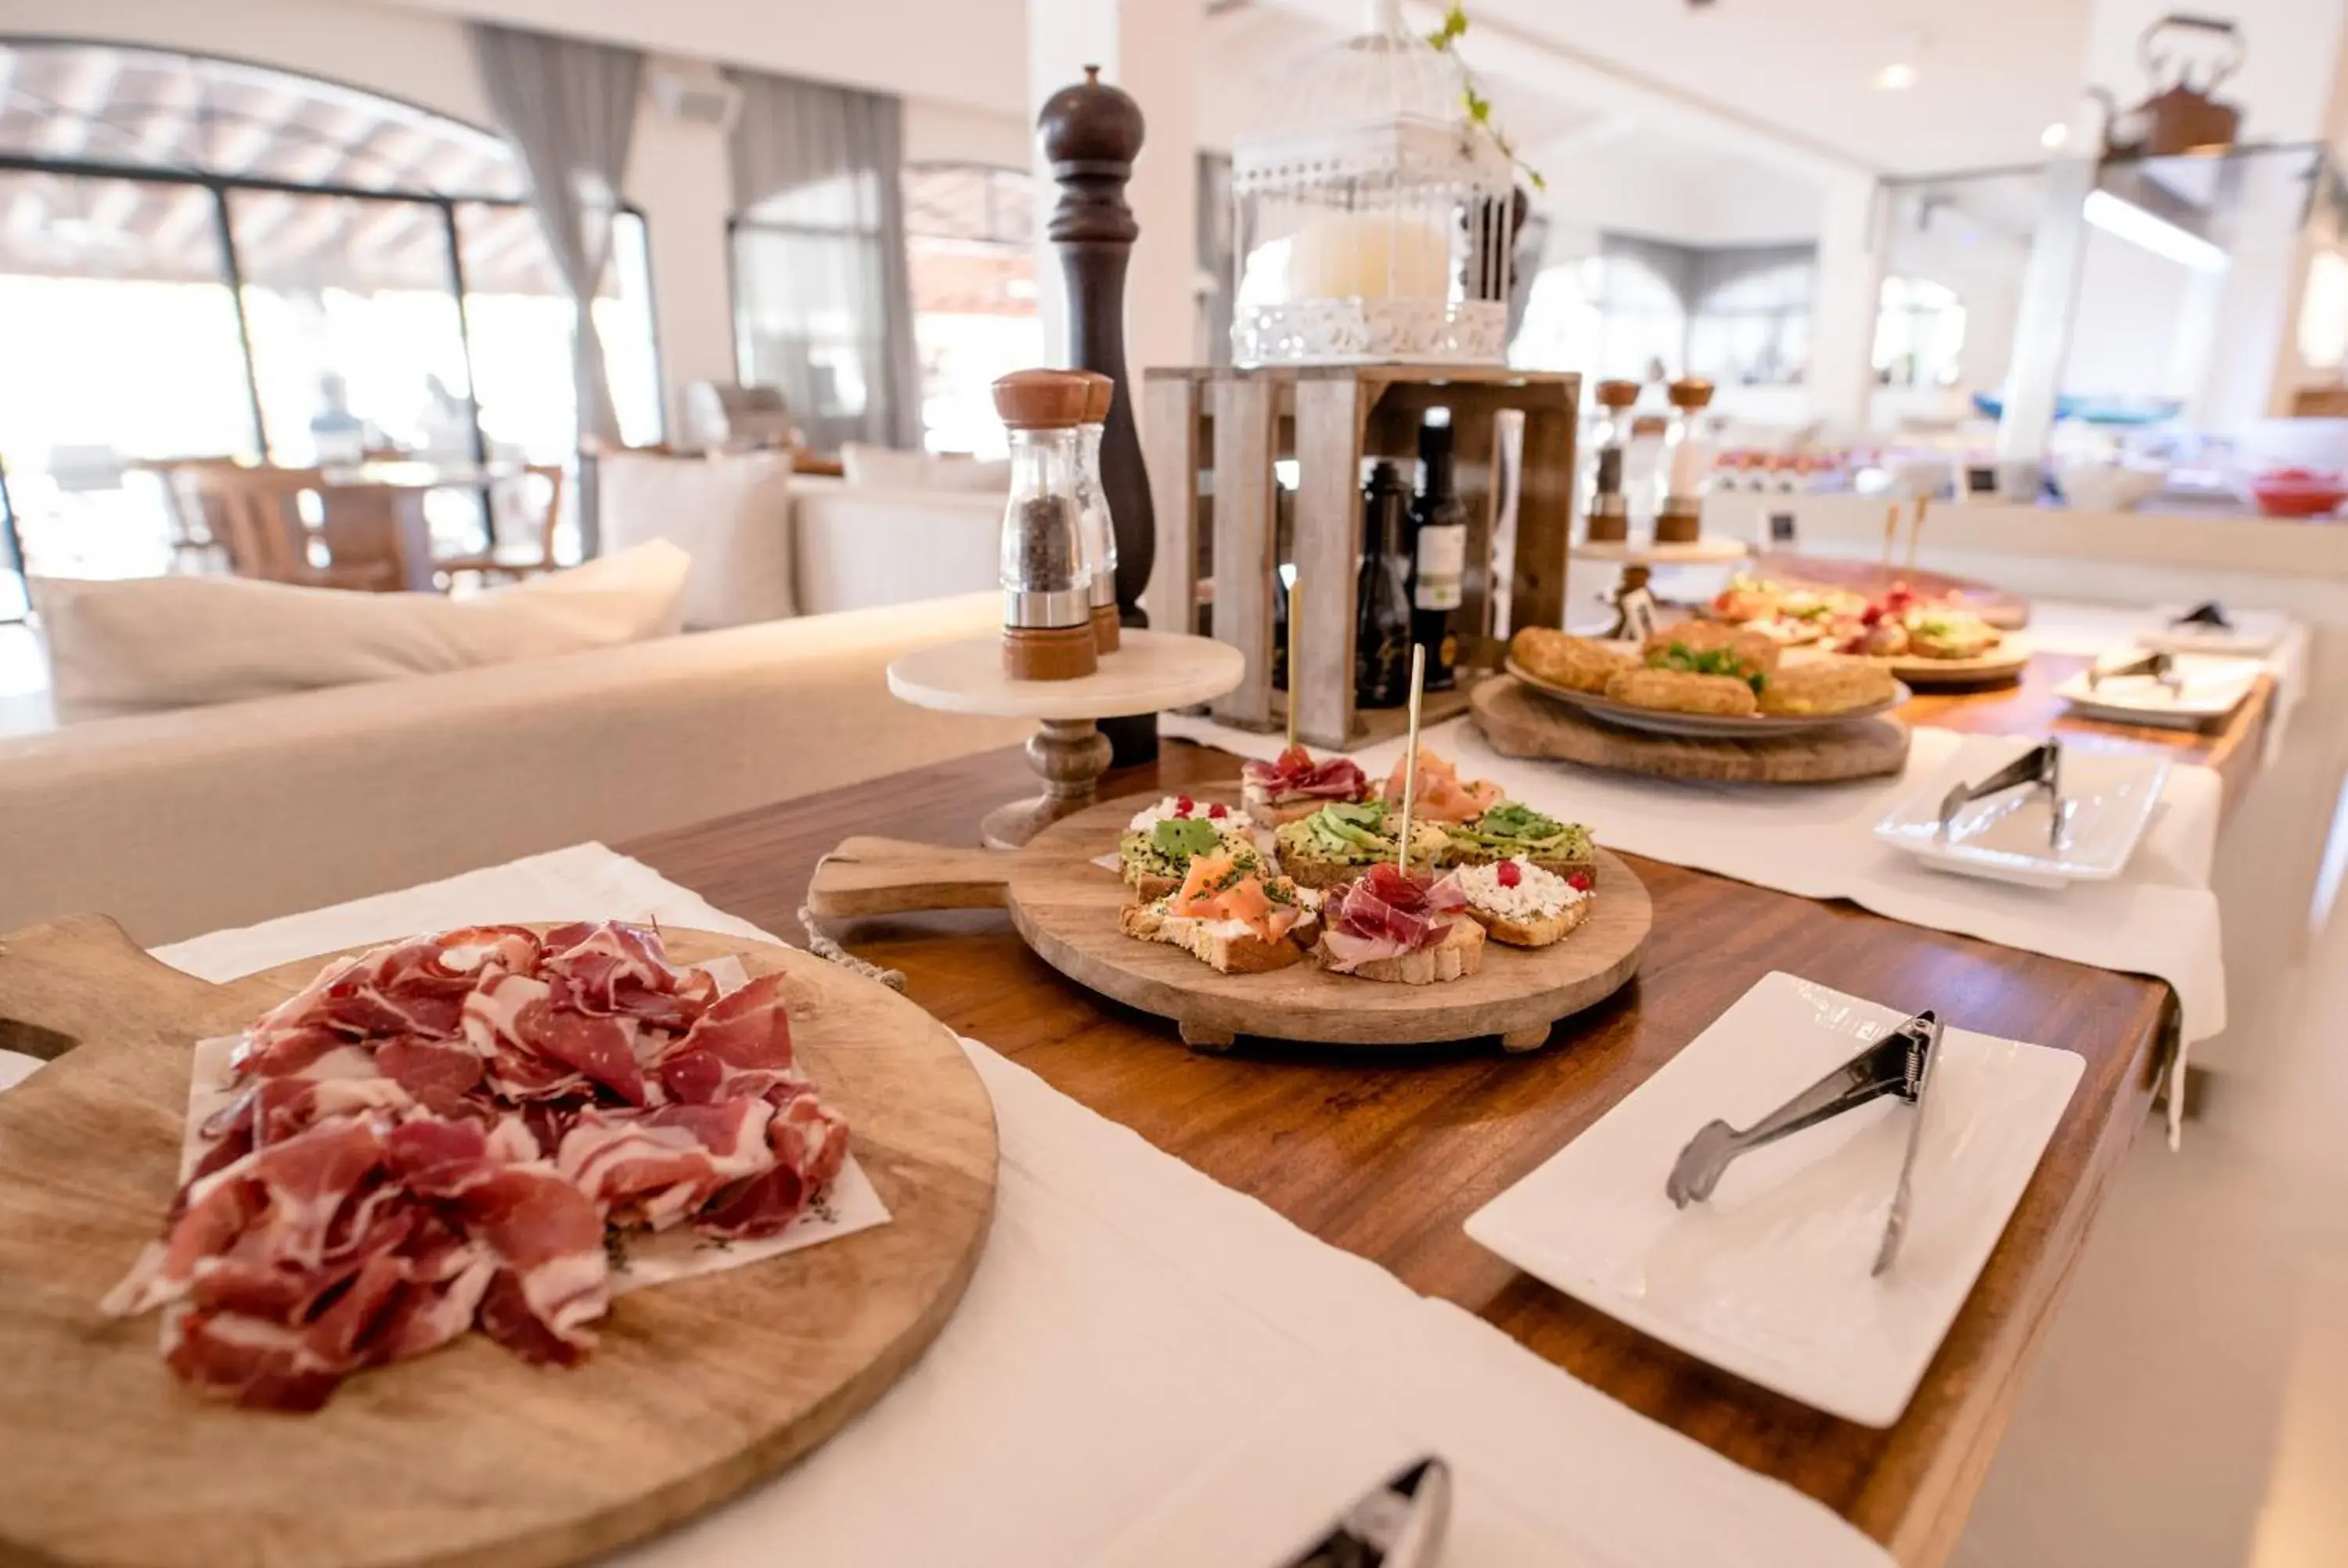 Buffet breakfast in Destino Pacha Ibiza - Entrance to Pacha Club Included